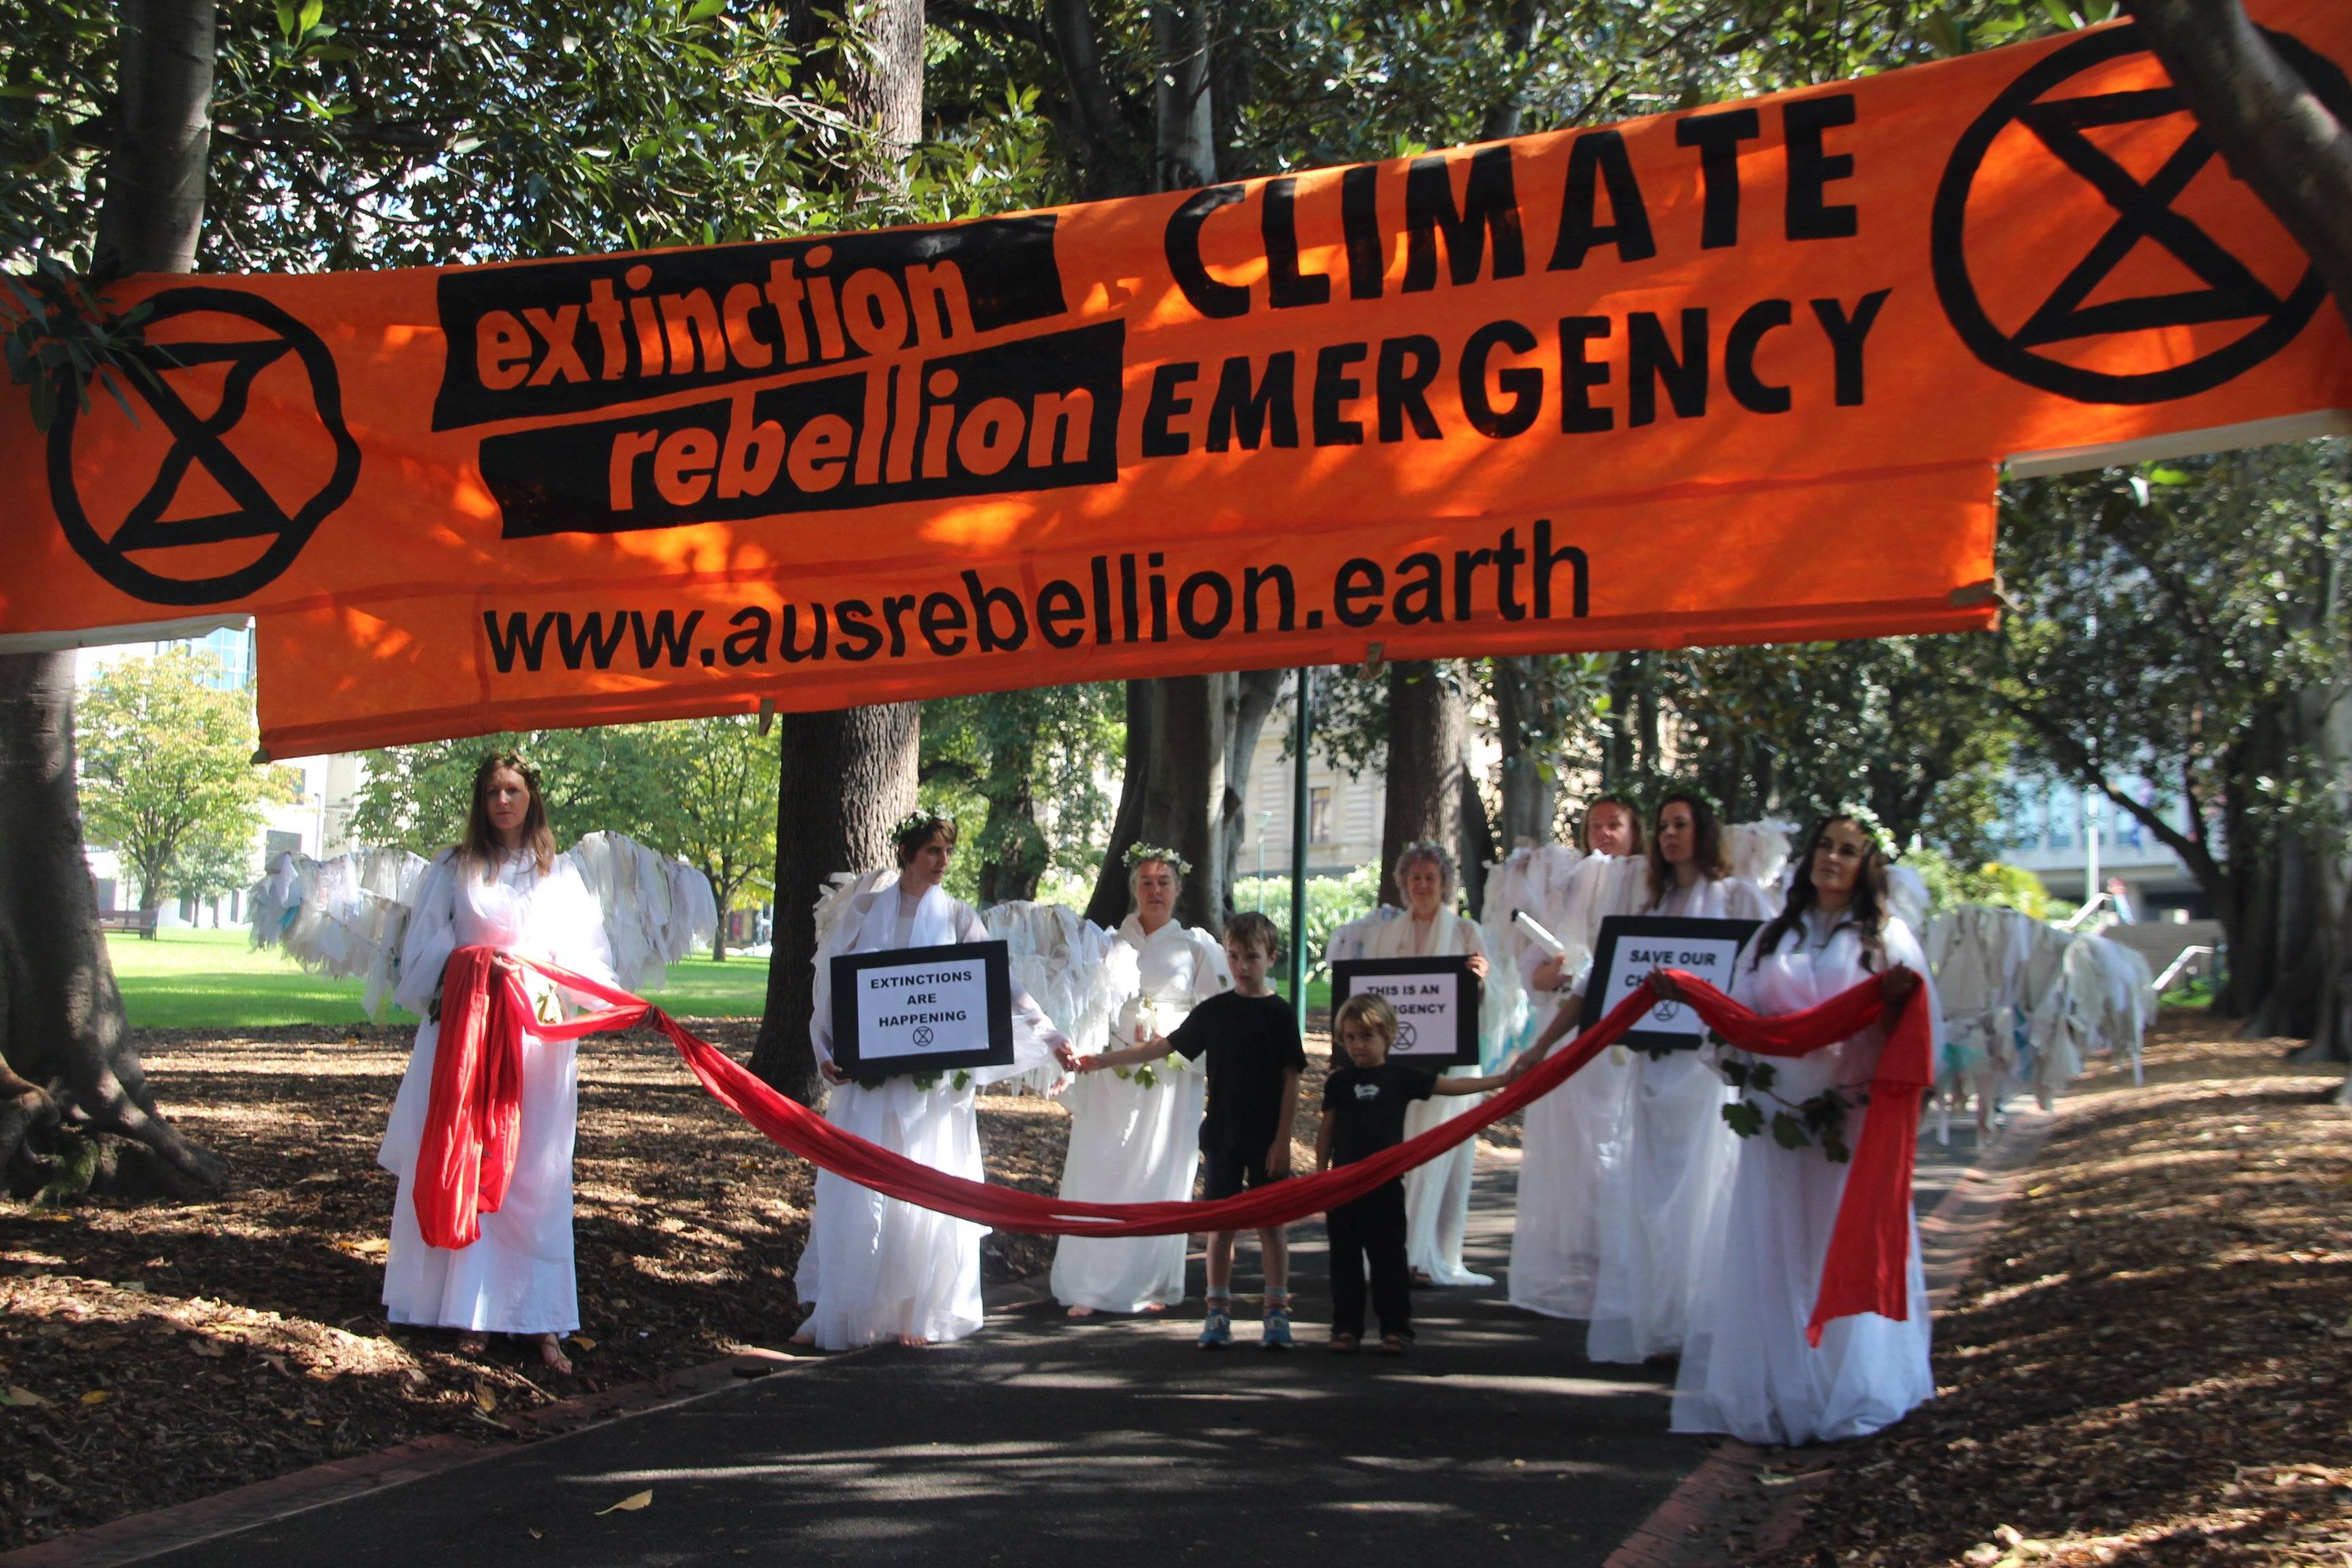 Climate Angels at Extinction Rebellion Declaration Day Melbourne, 22 marca 2019 fot. Takver (cc) flickr.com